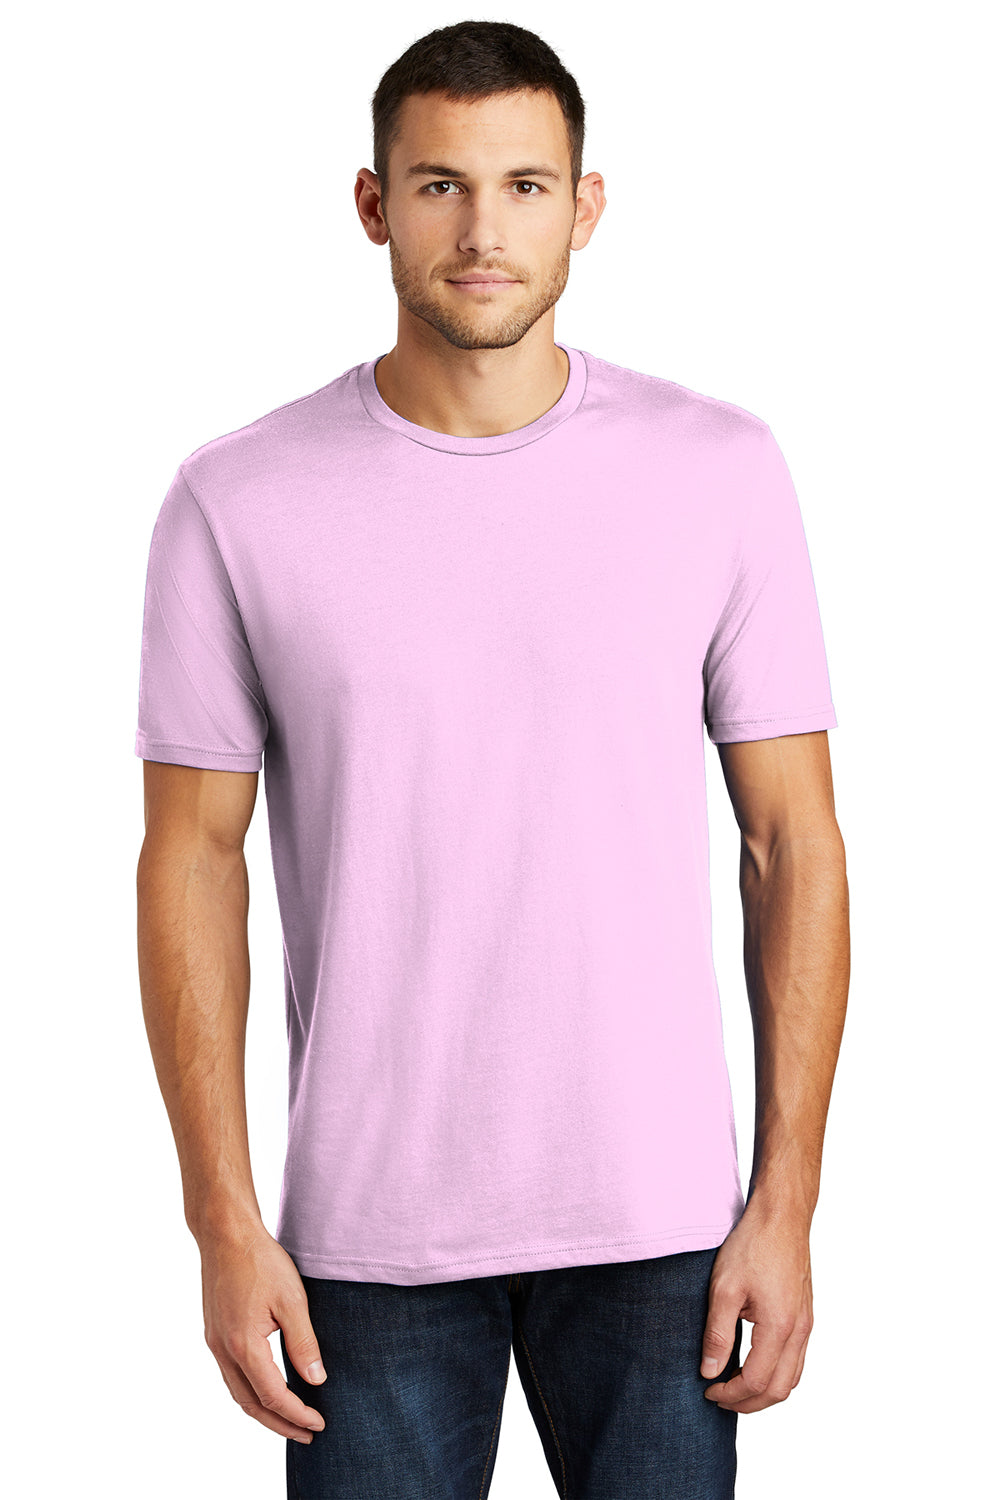 District DT104 Mens Perfect Weight Short Sleeve Crewneck T-Shirt Soft Purple Front